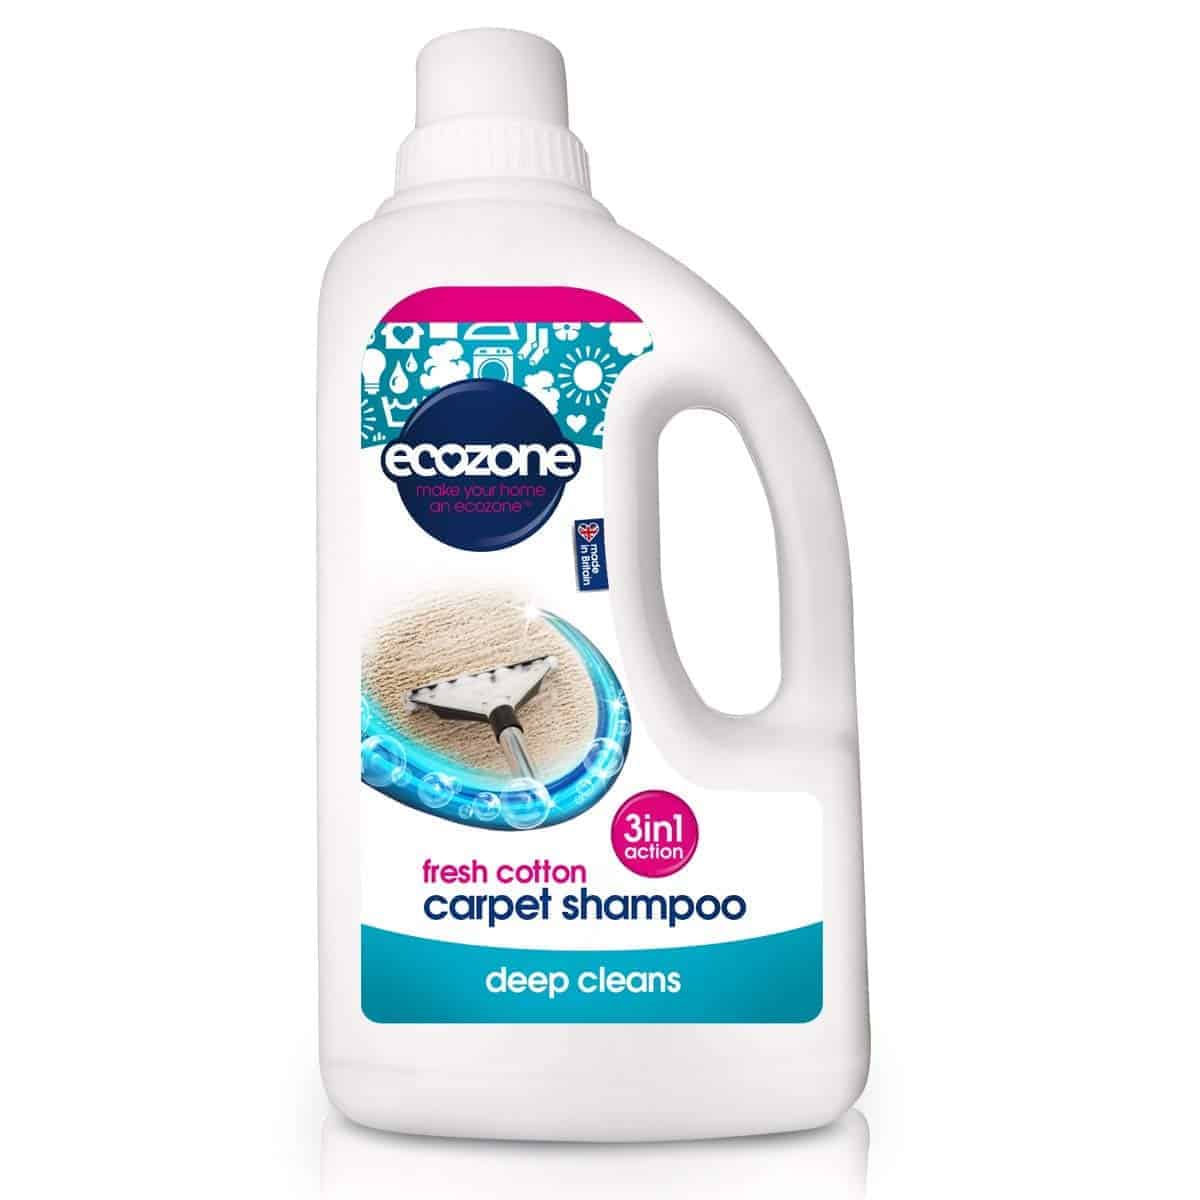 Ecozone-carpet-shampoo-solution